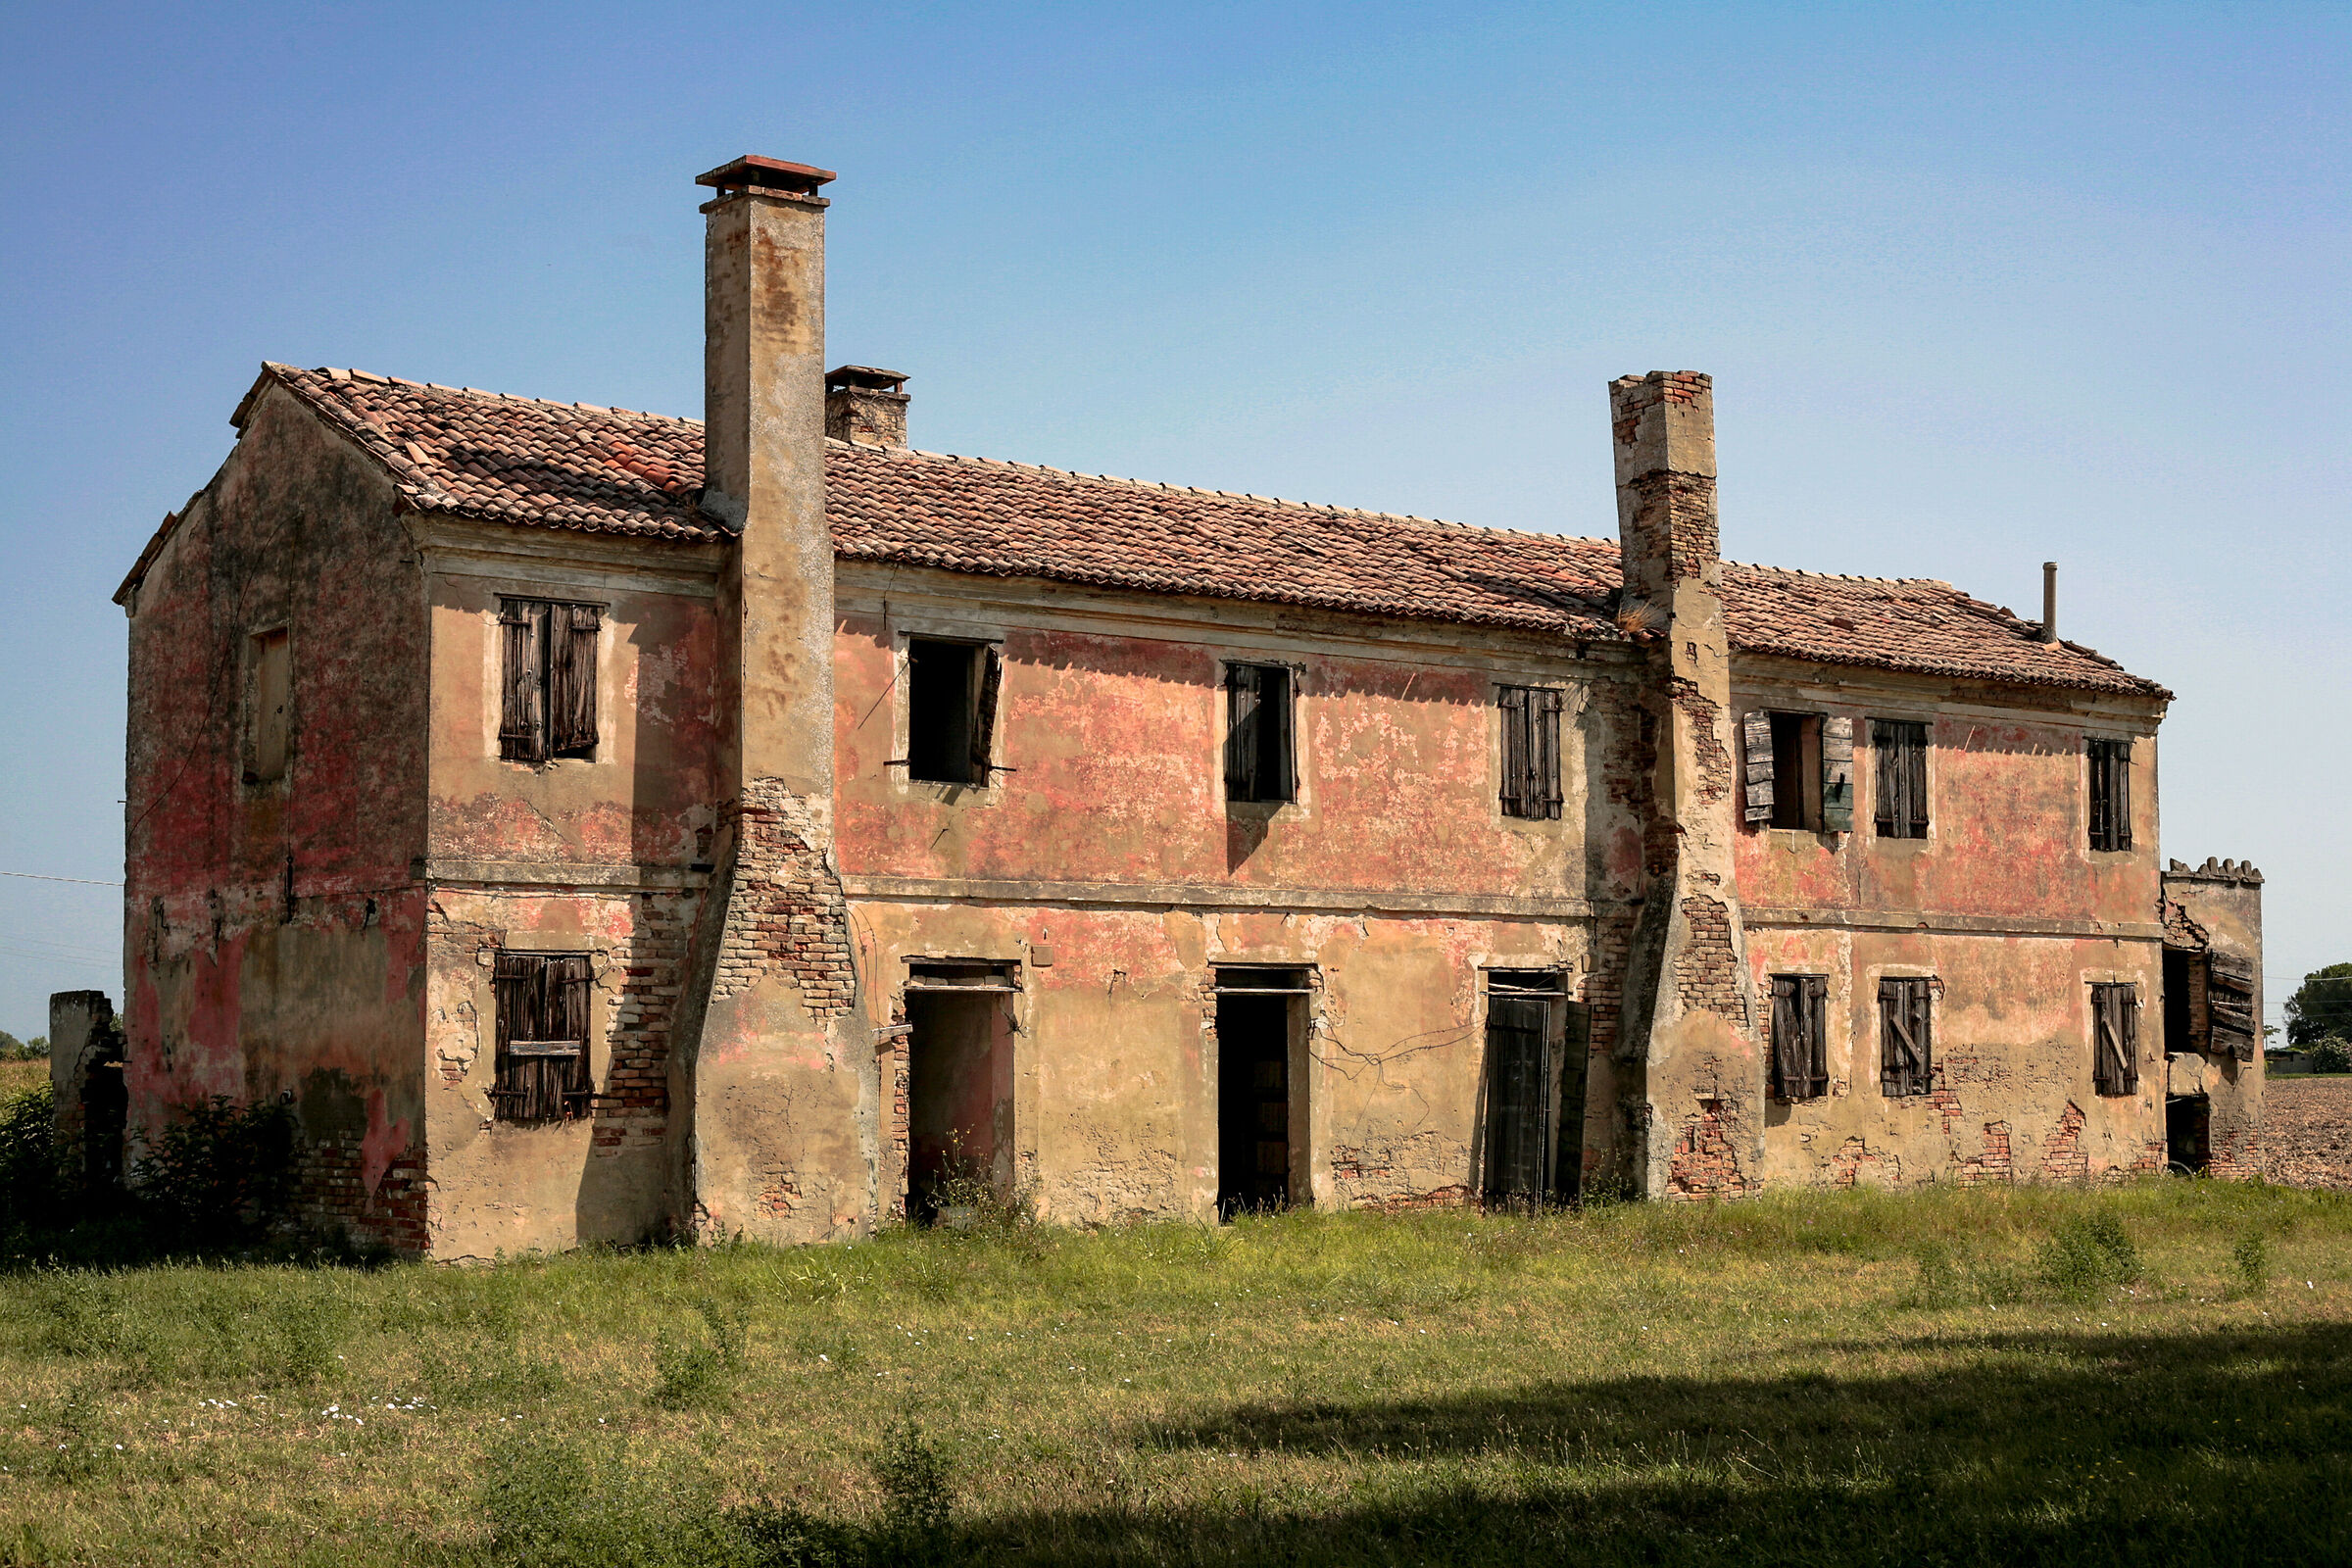 Abandoned farmhouse in the Veneto countryside...